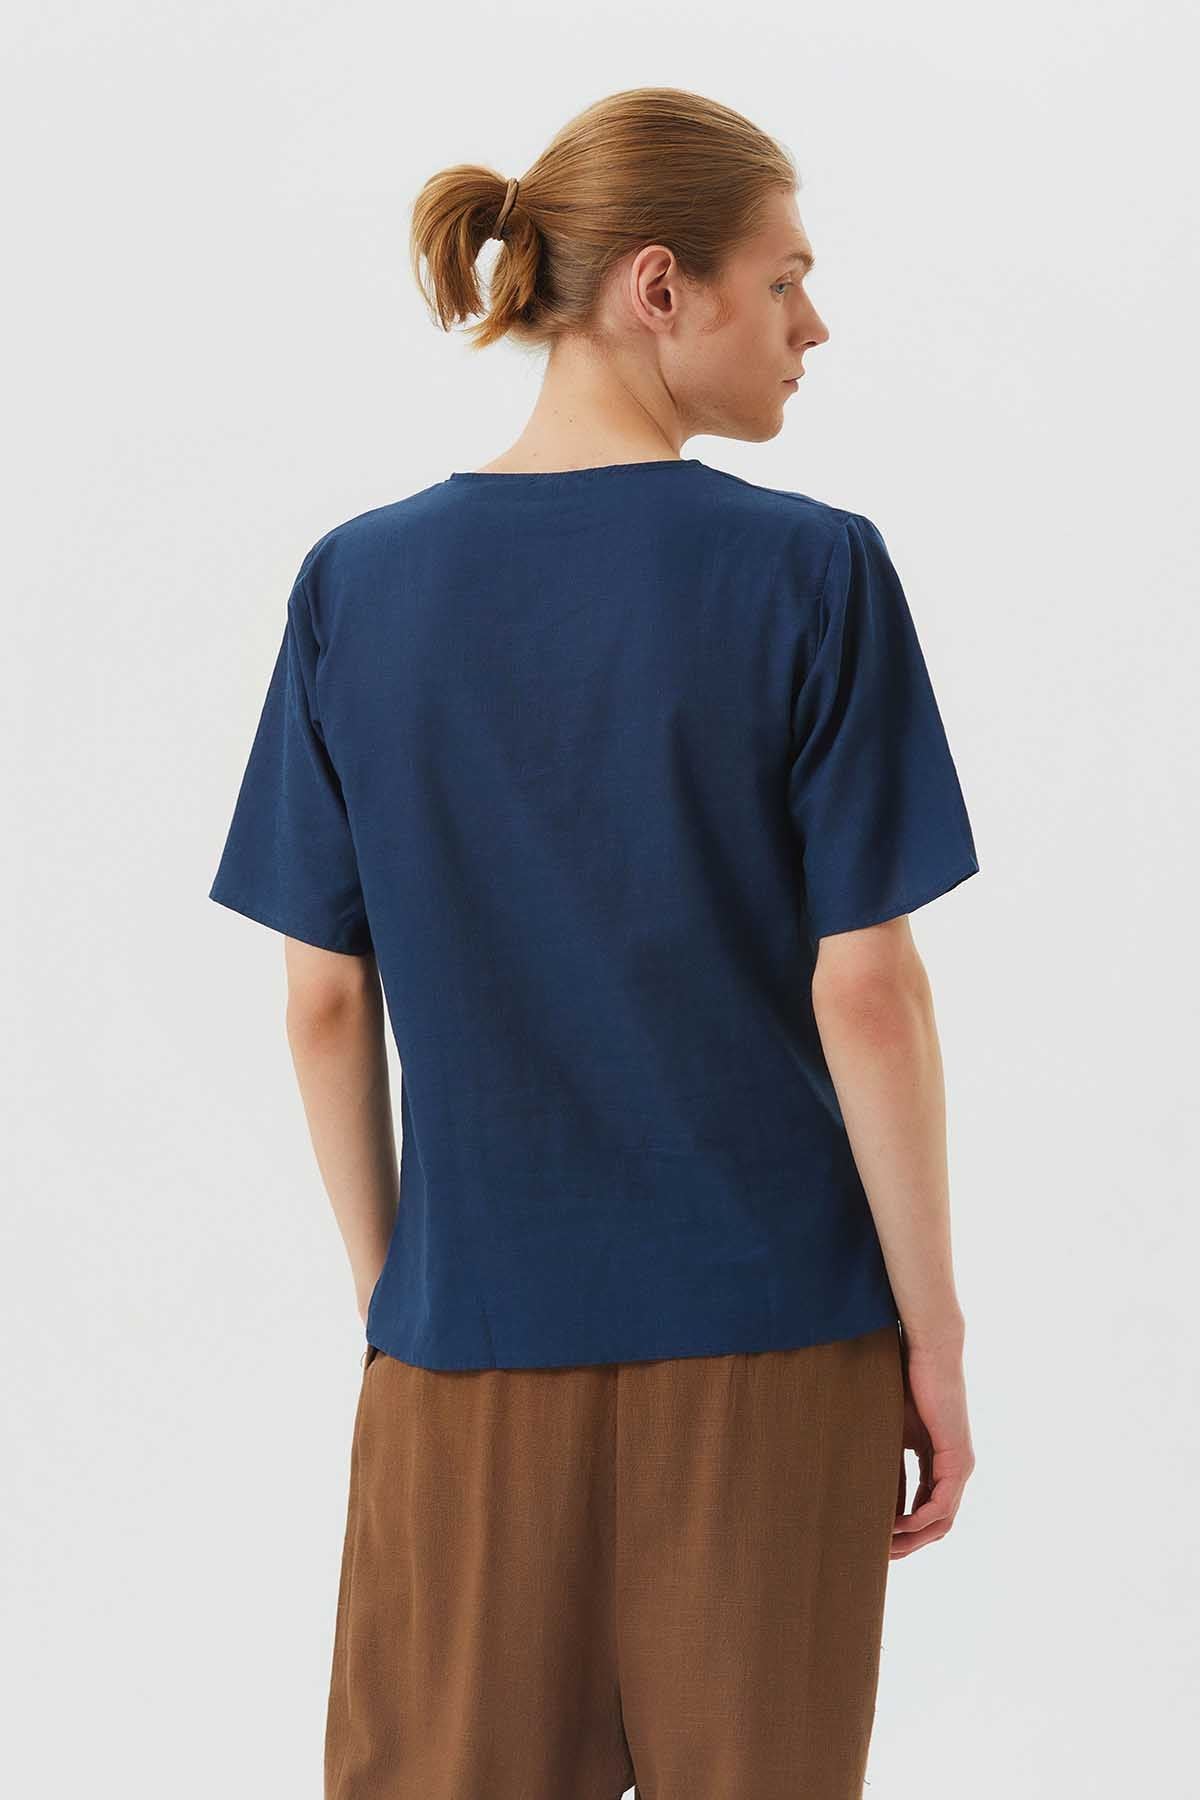 Men's Short Sleeve Boho Hippie Shirt Dark Blue